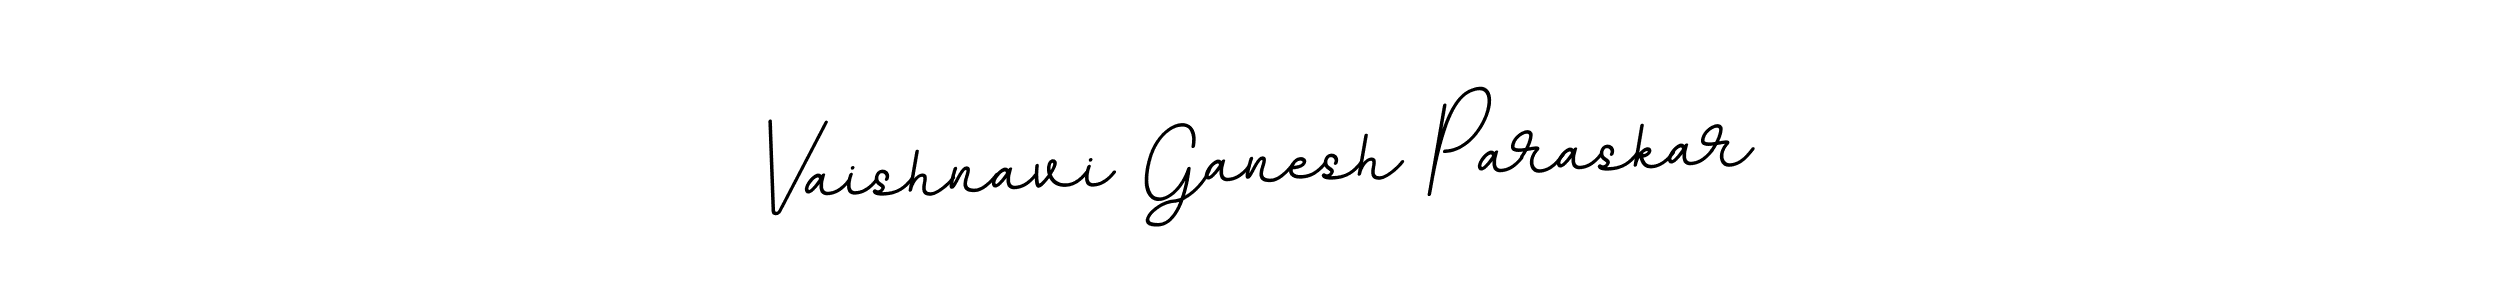 Vaishnavi Ganesh Paraskar stylish signature style. Best Handwritten Sign (BallpointsItalic-DORy9) for my name. Handwritten Signature Collection Ideas for my name Vaishnavi Ganesh Paraskar. Vaishnavi Ganesh Paraskar signature style 11 images and pictures png